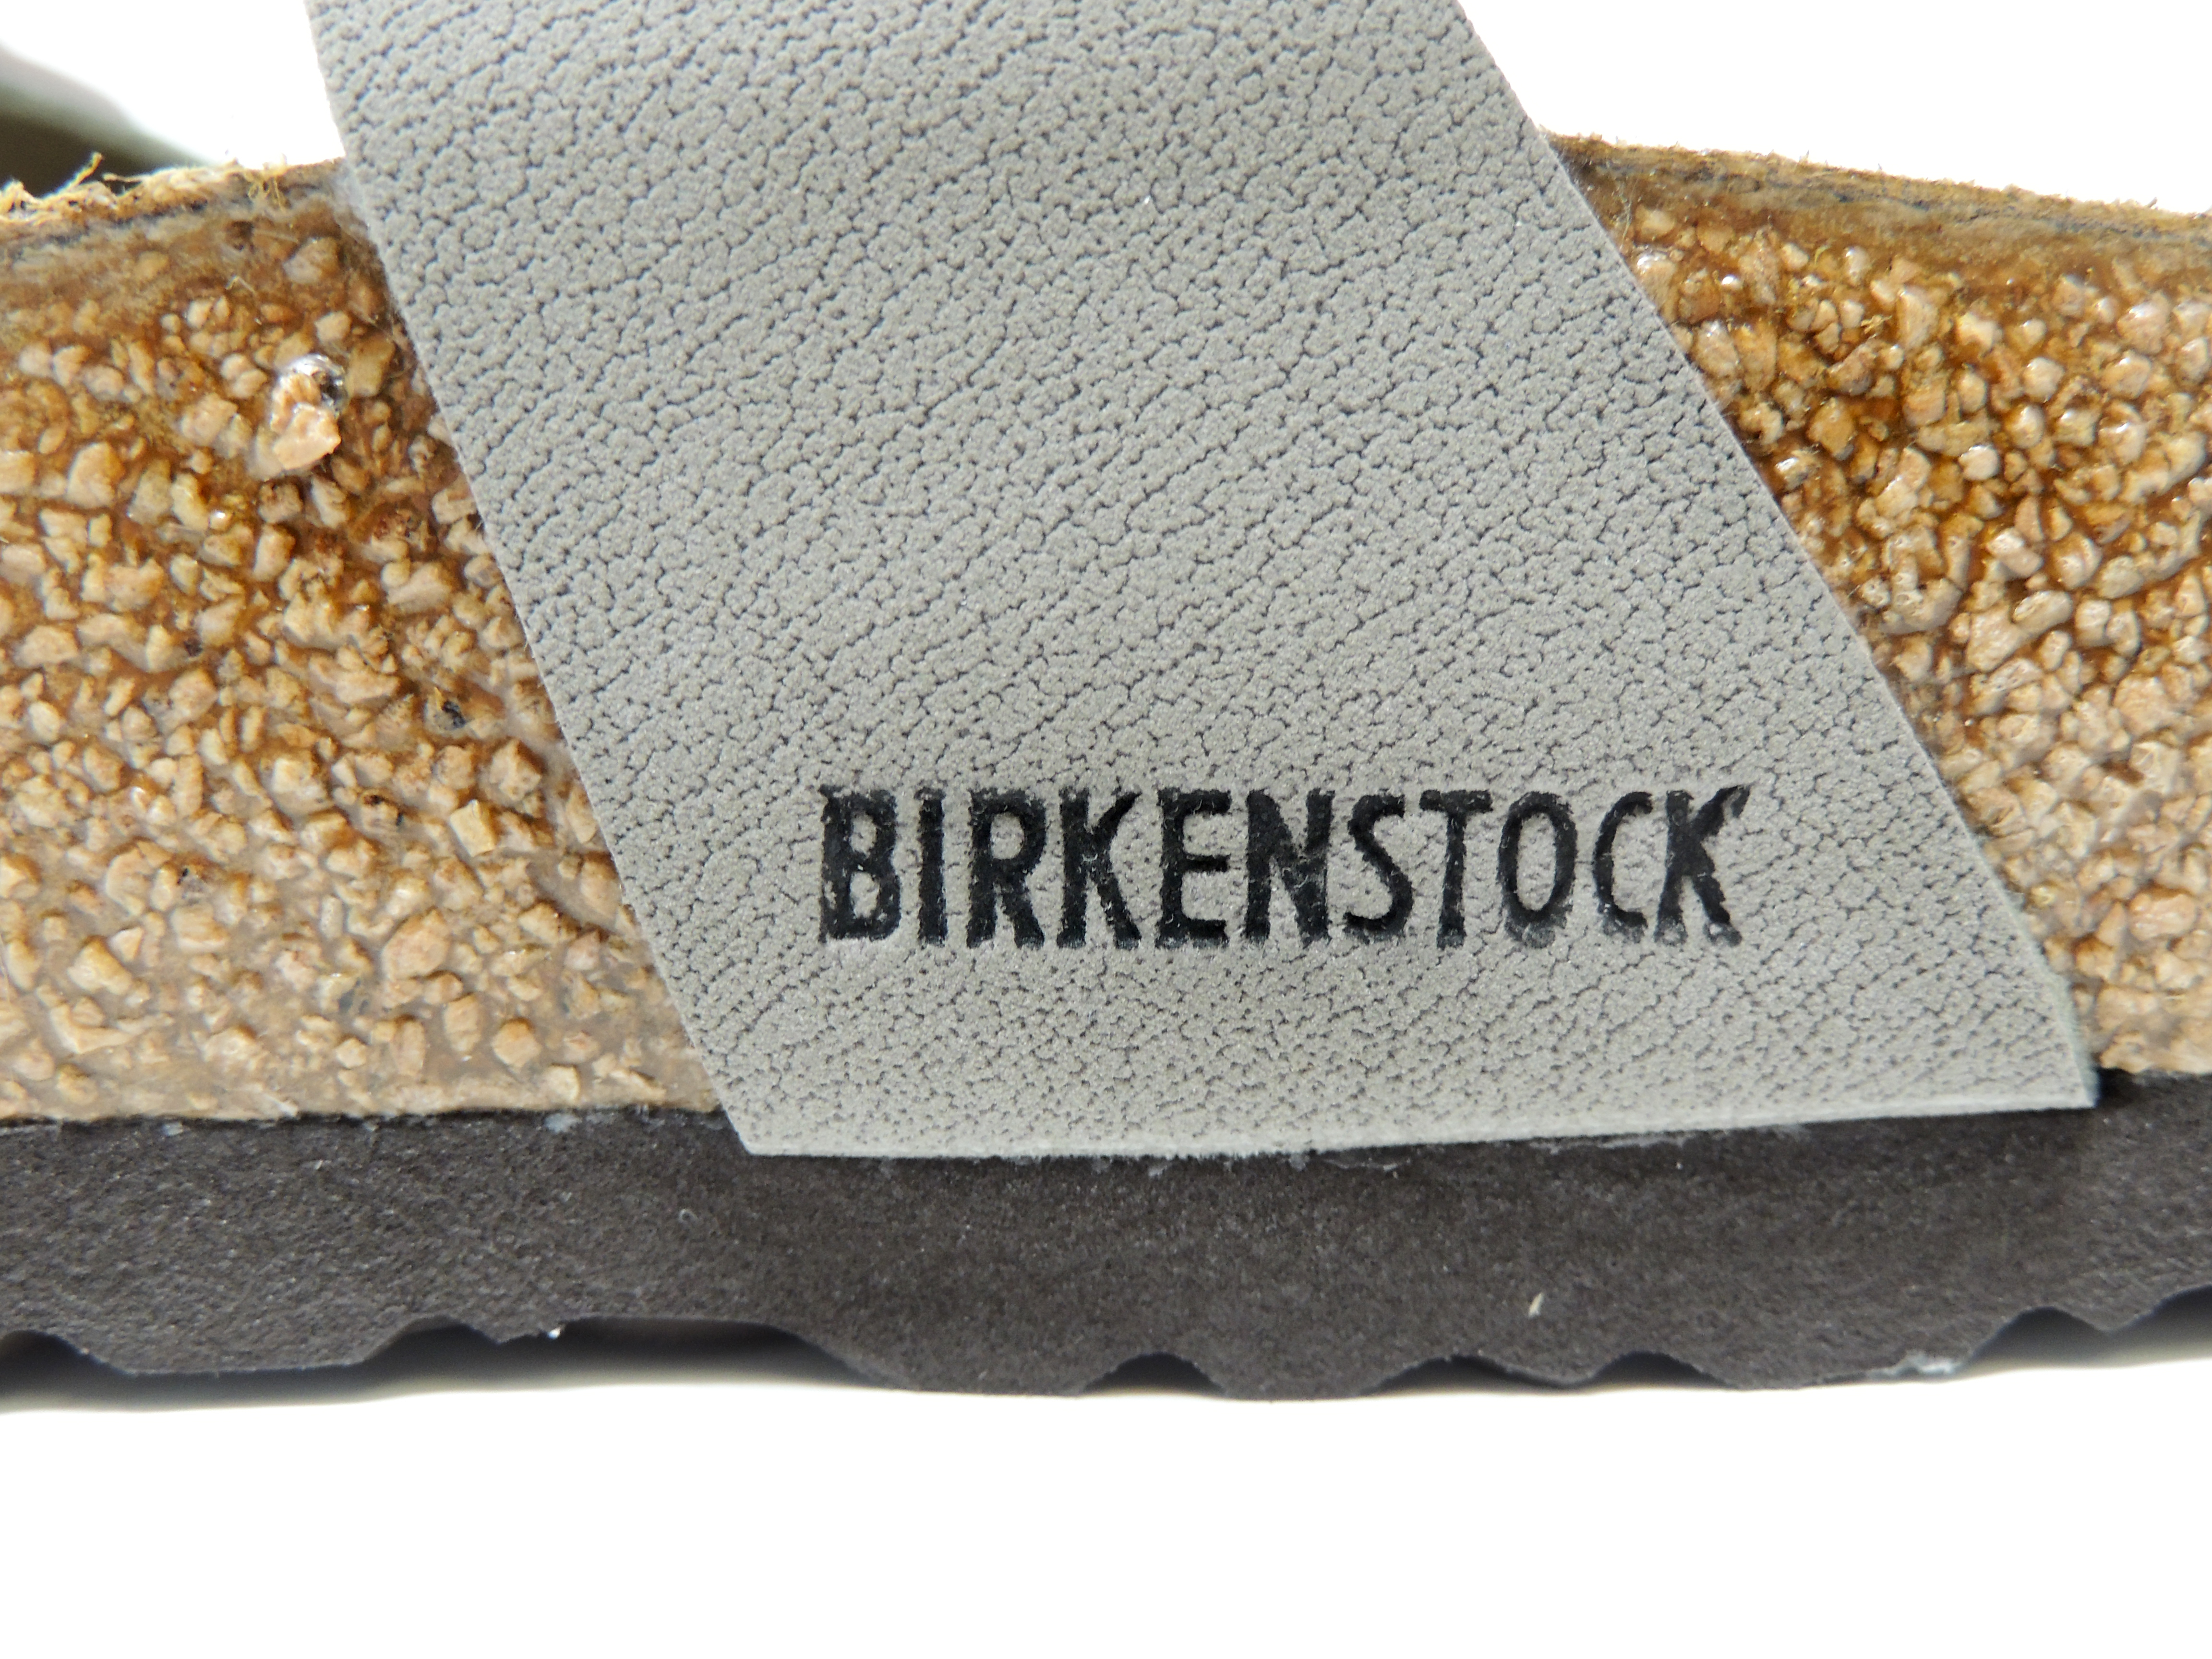 ugg birkenstocks